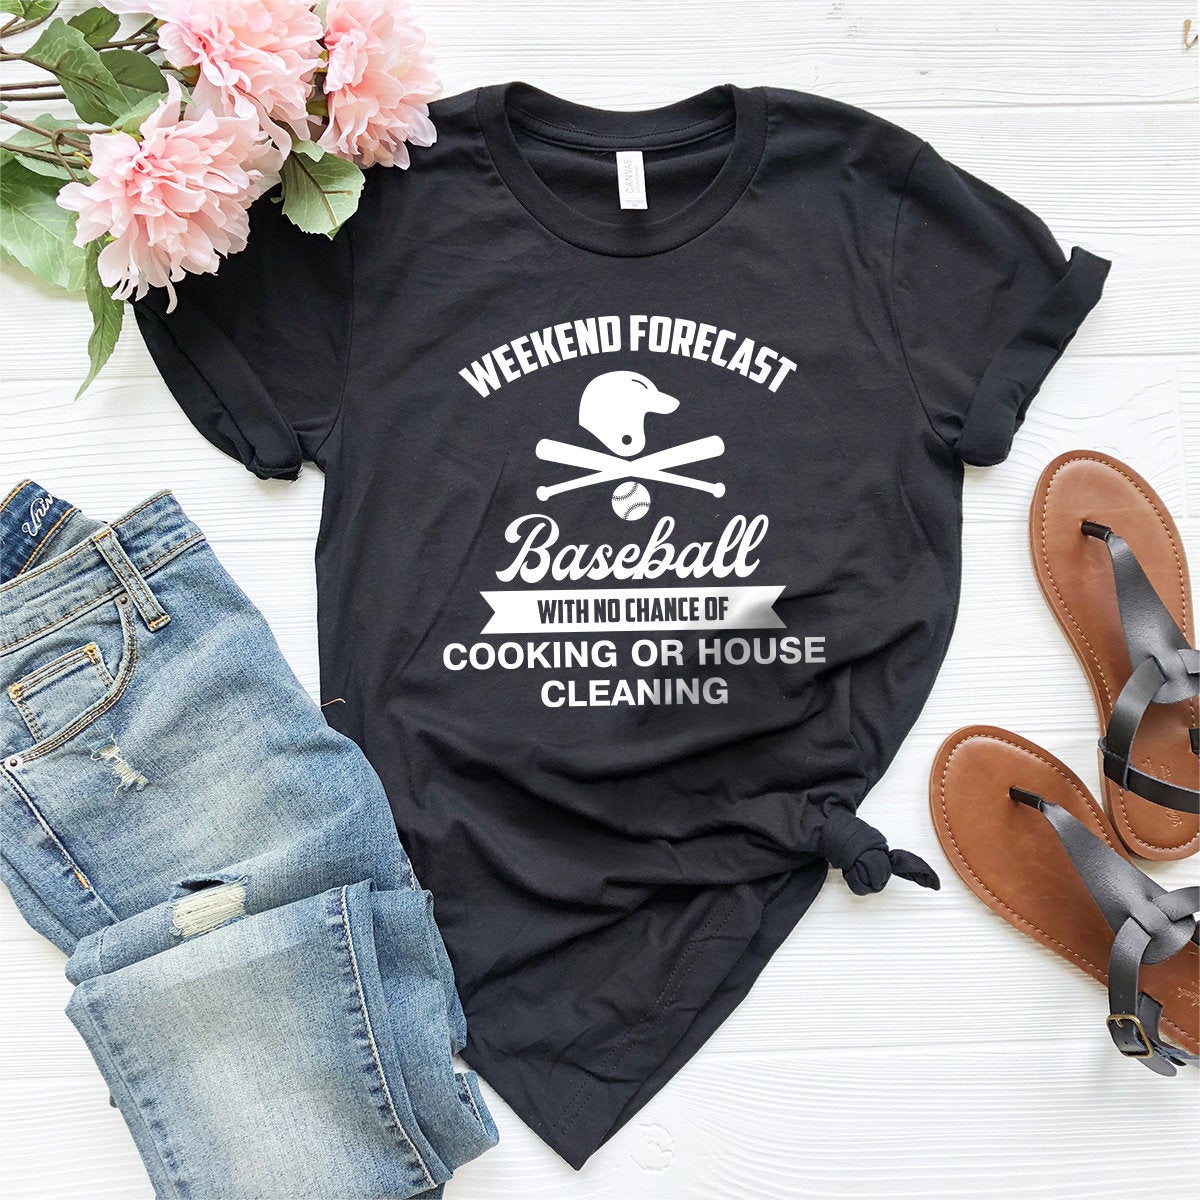 Weekend Forecast Baseball Shirt, Baseball T-Shirt, Baseball Mom Shirt, Softball Shirt, Baseball Fan Tee, Baseball Mama Shirt, Baseball Gift - Fastdeliverytees.com